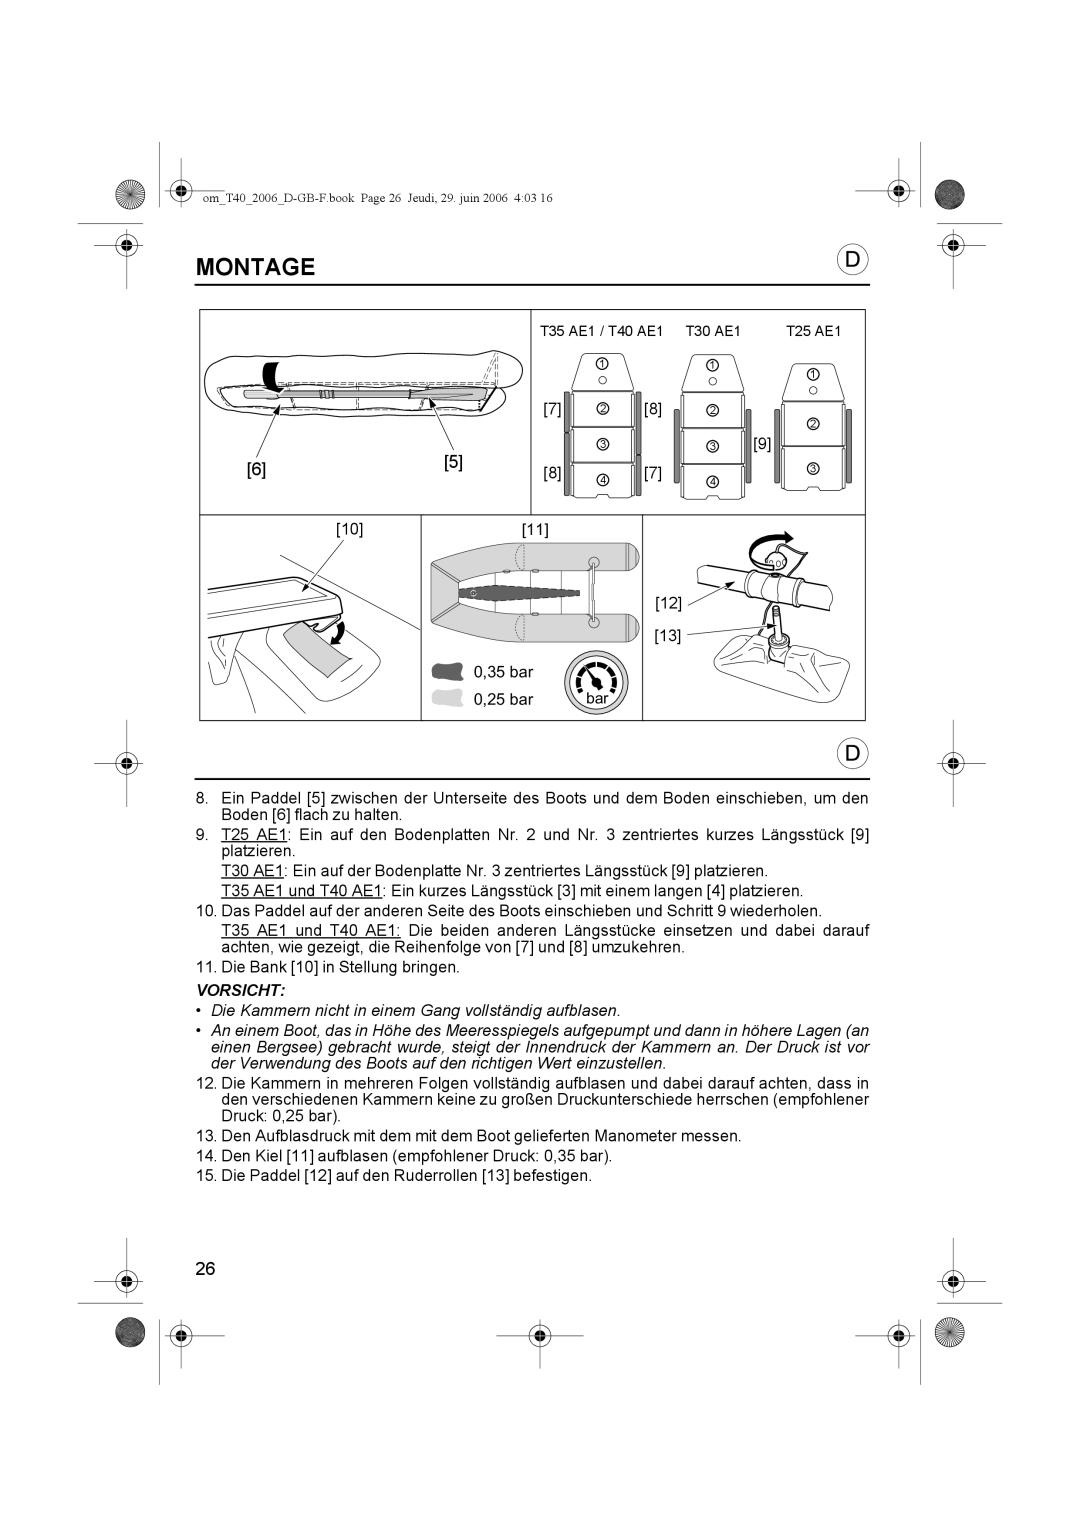 Honda Power Equipment T24, T32, T38, T35, T30, T27, T20, T25 Montage, omT402006D-GB-F.book Page 26 Jeudi, 29. juin 2006 403 